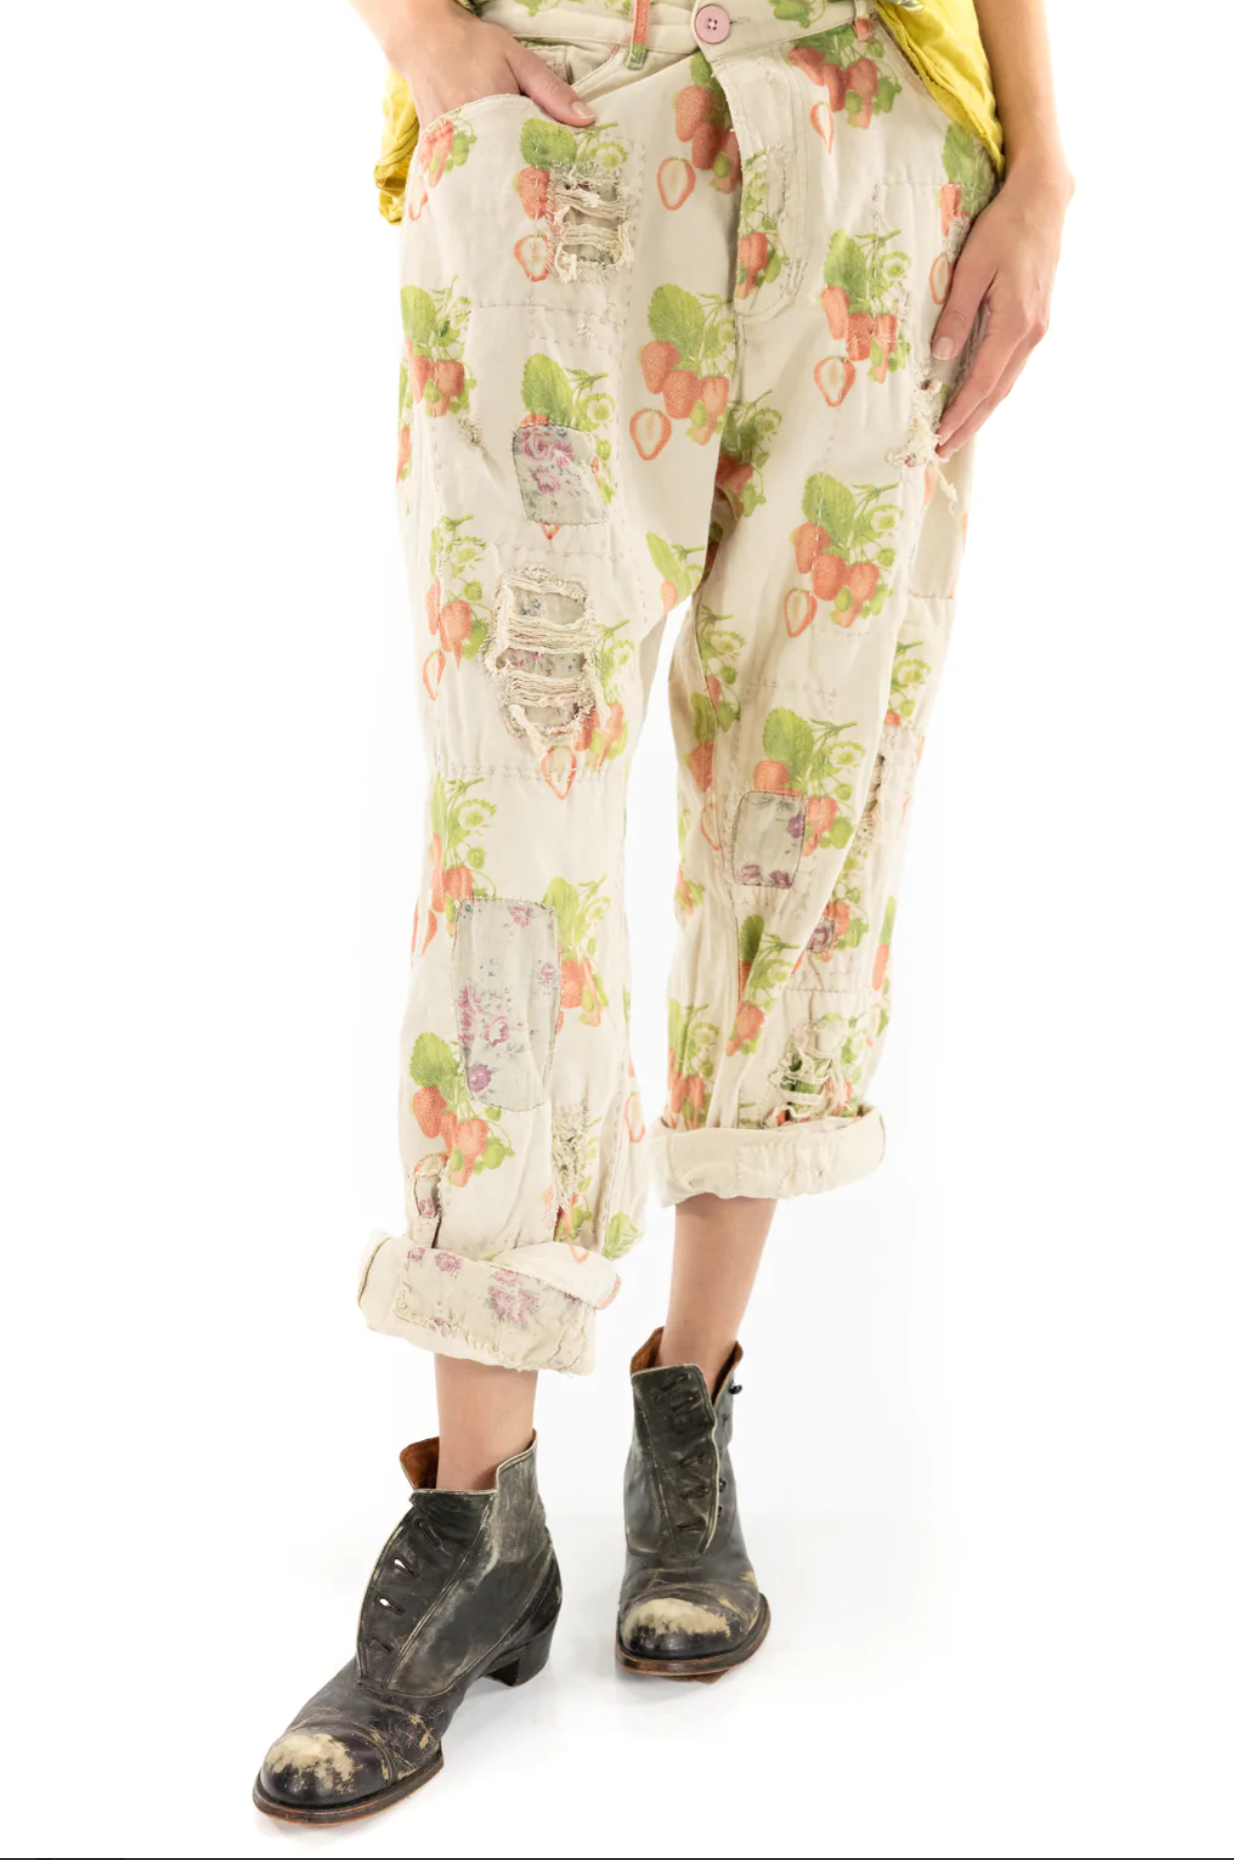 Magnolia Pearl PANTS 377-LAFRA-OS  Bobbie Trousers